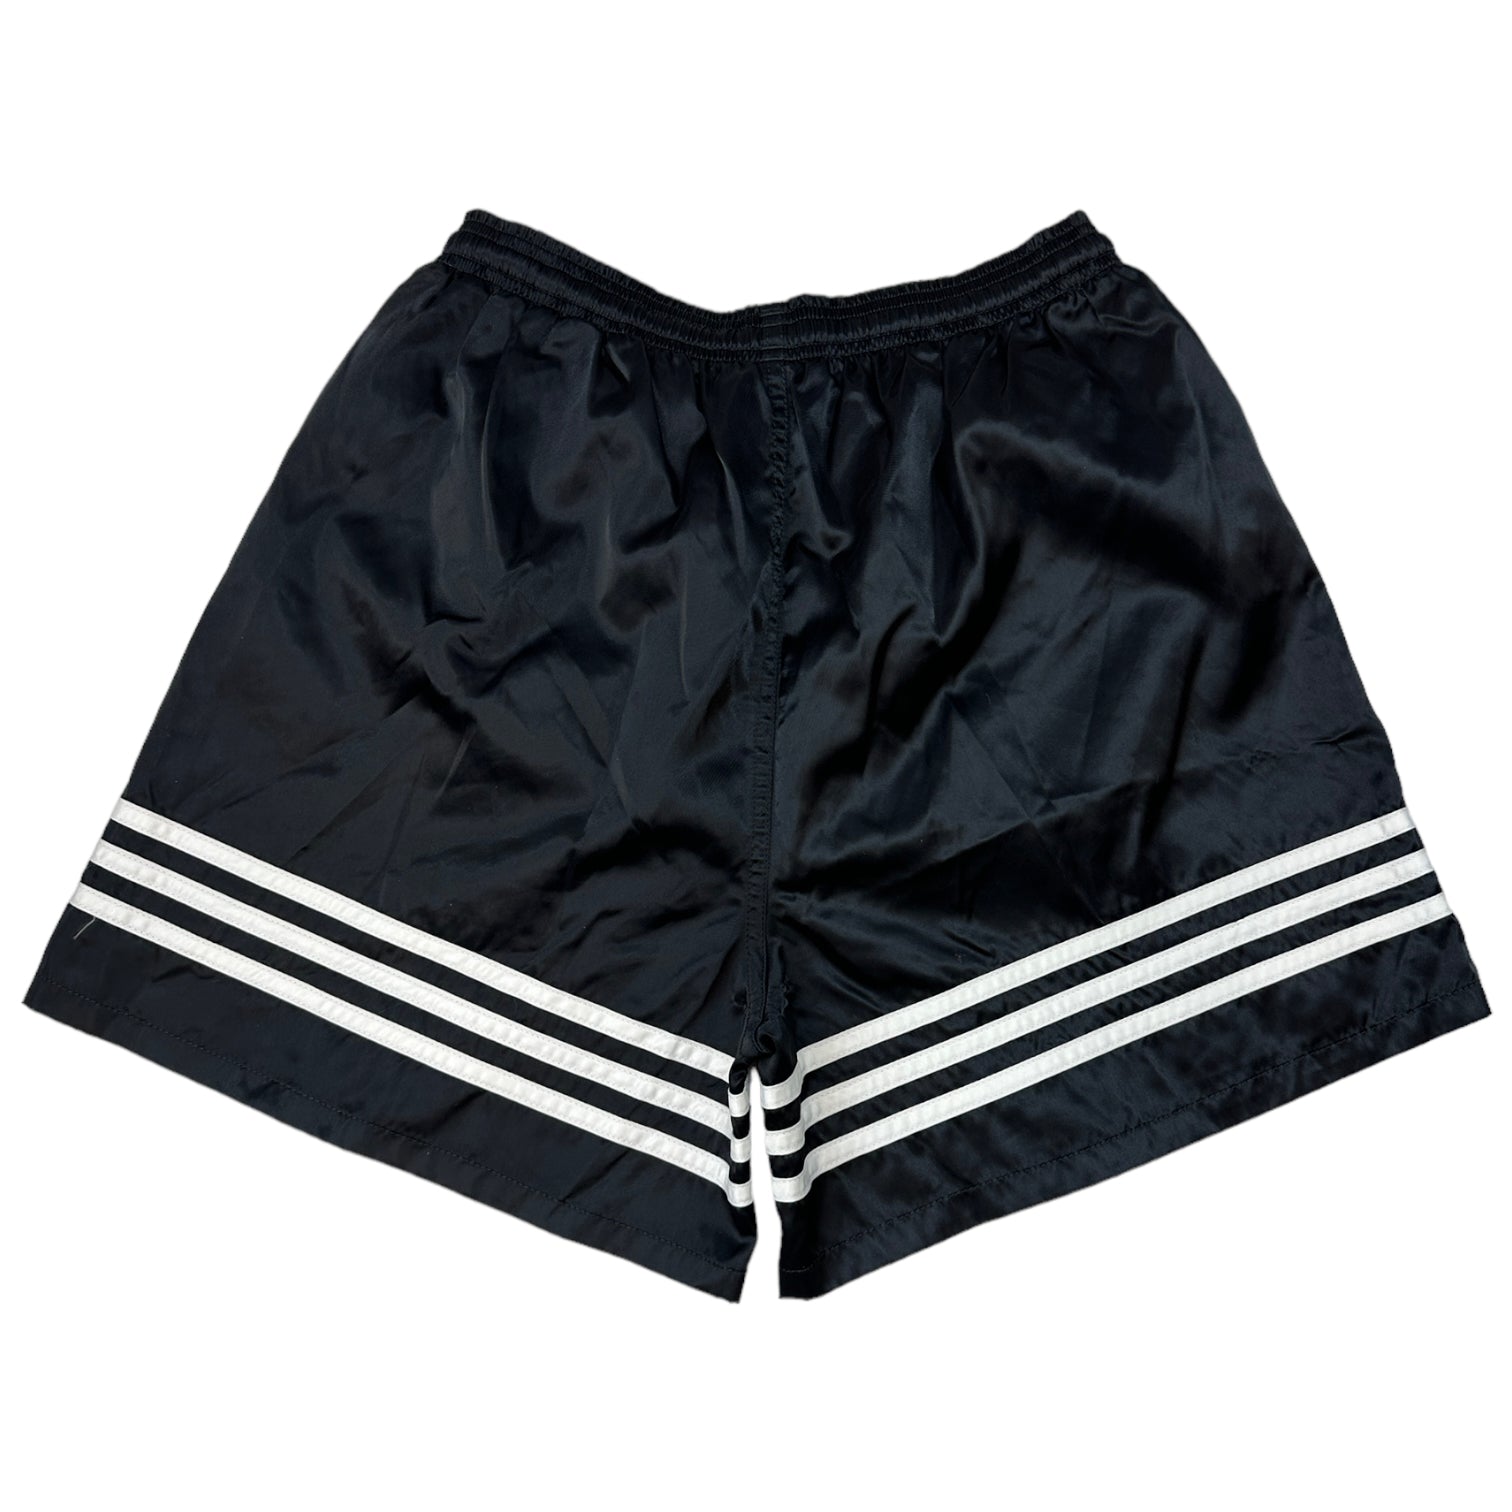 Vintage Adidas Nylon Shorts Black